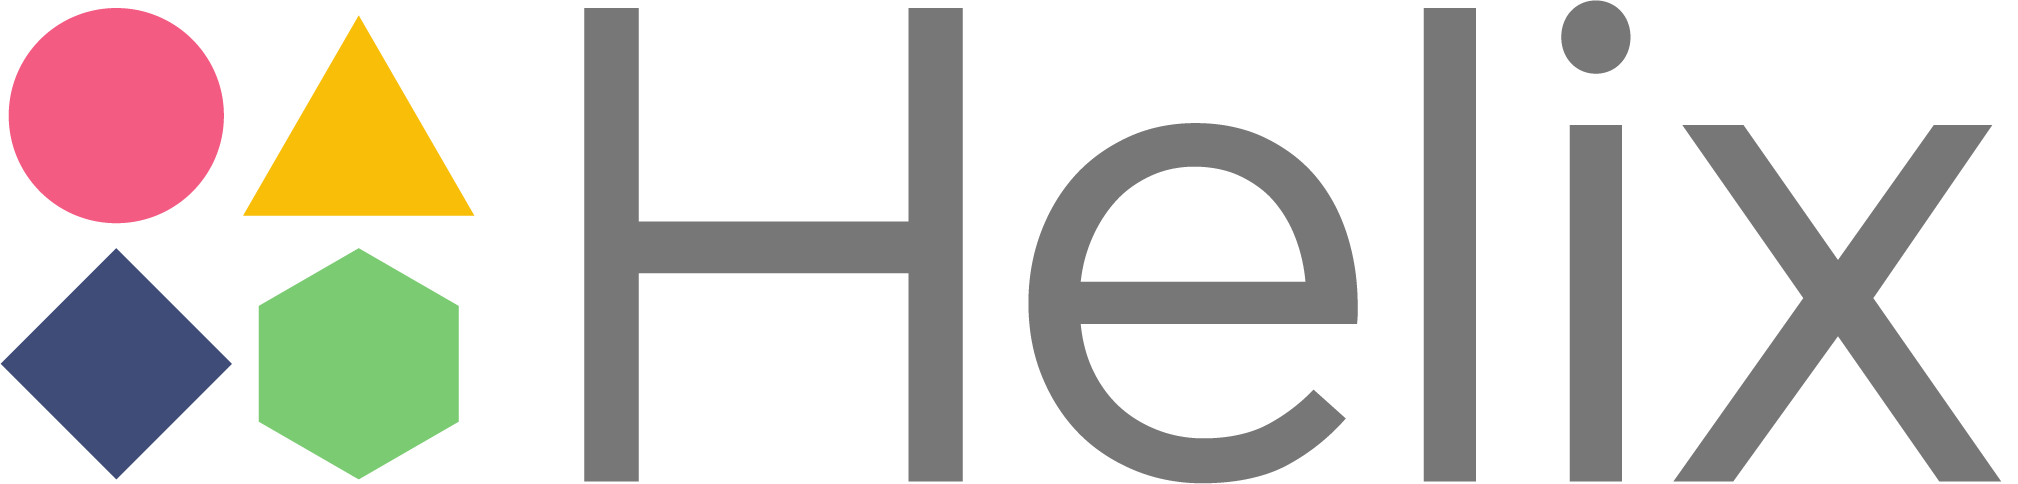 Helix Logo - Helix Your DNA